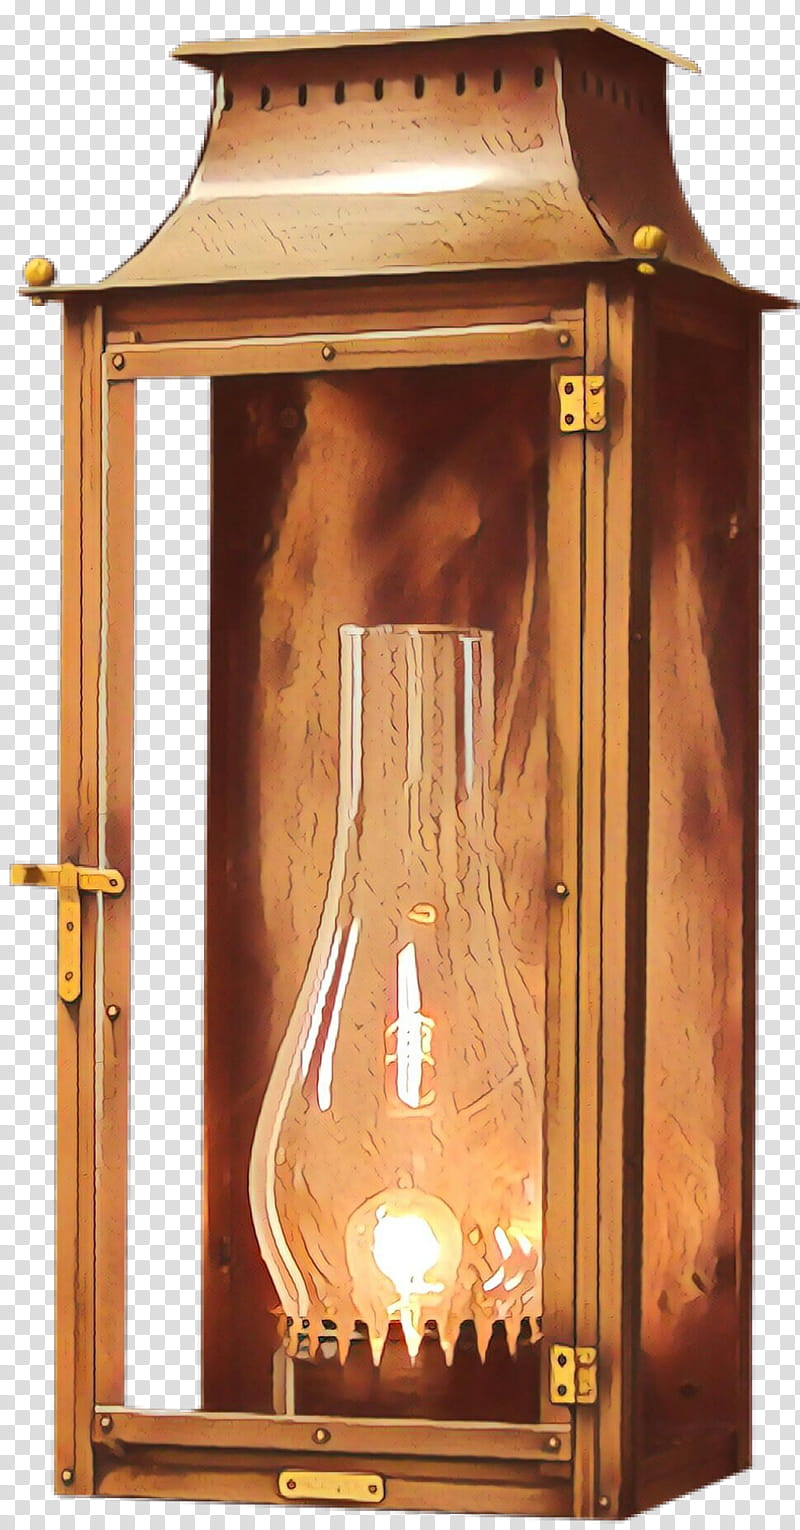 Wood, Light Fixture, Lantern, Copper, Lighting, Brass, Sconce, Lighting Accessory transparent background PNG clipart